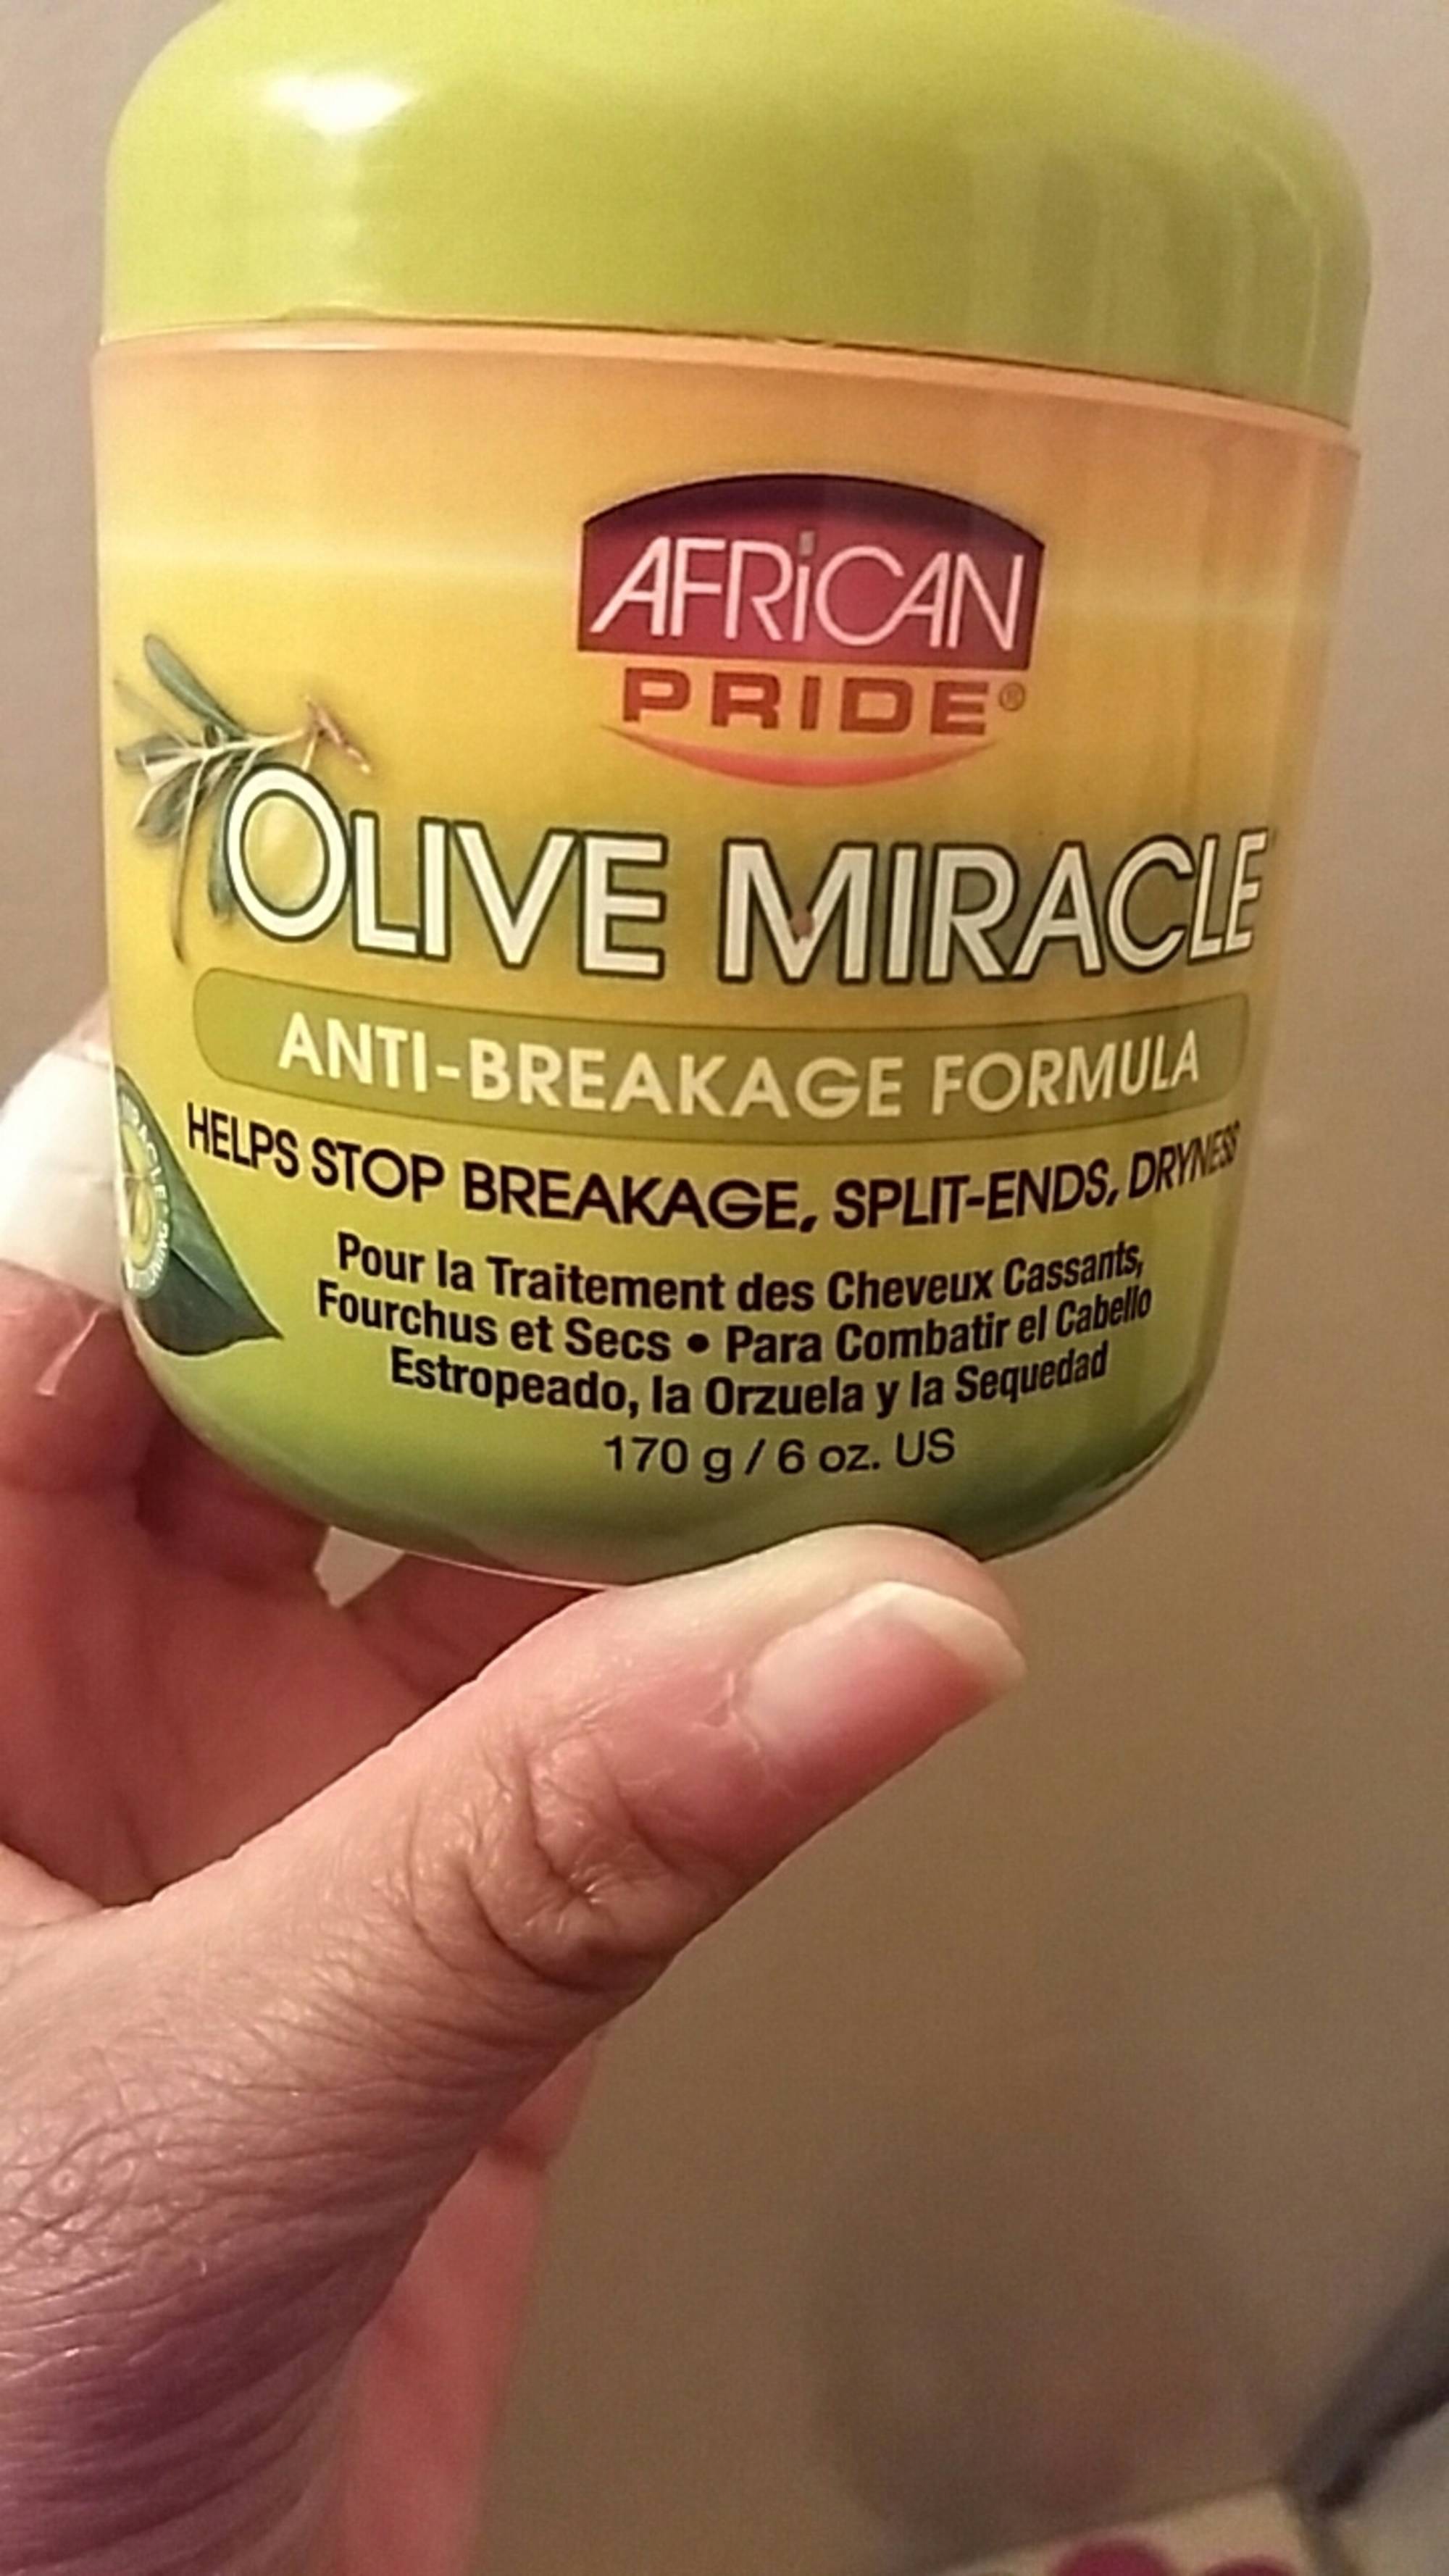 AFRICAN PRIDE - Olive miracle - Anti-breakage formula